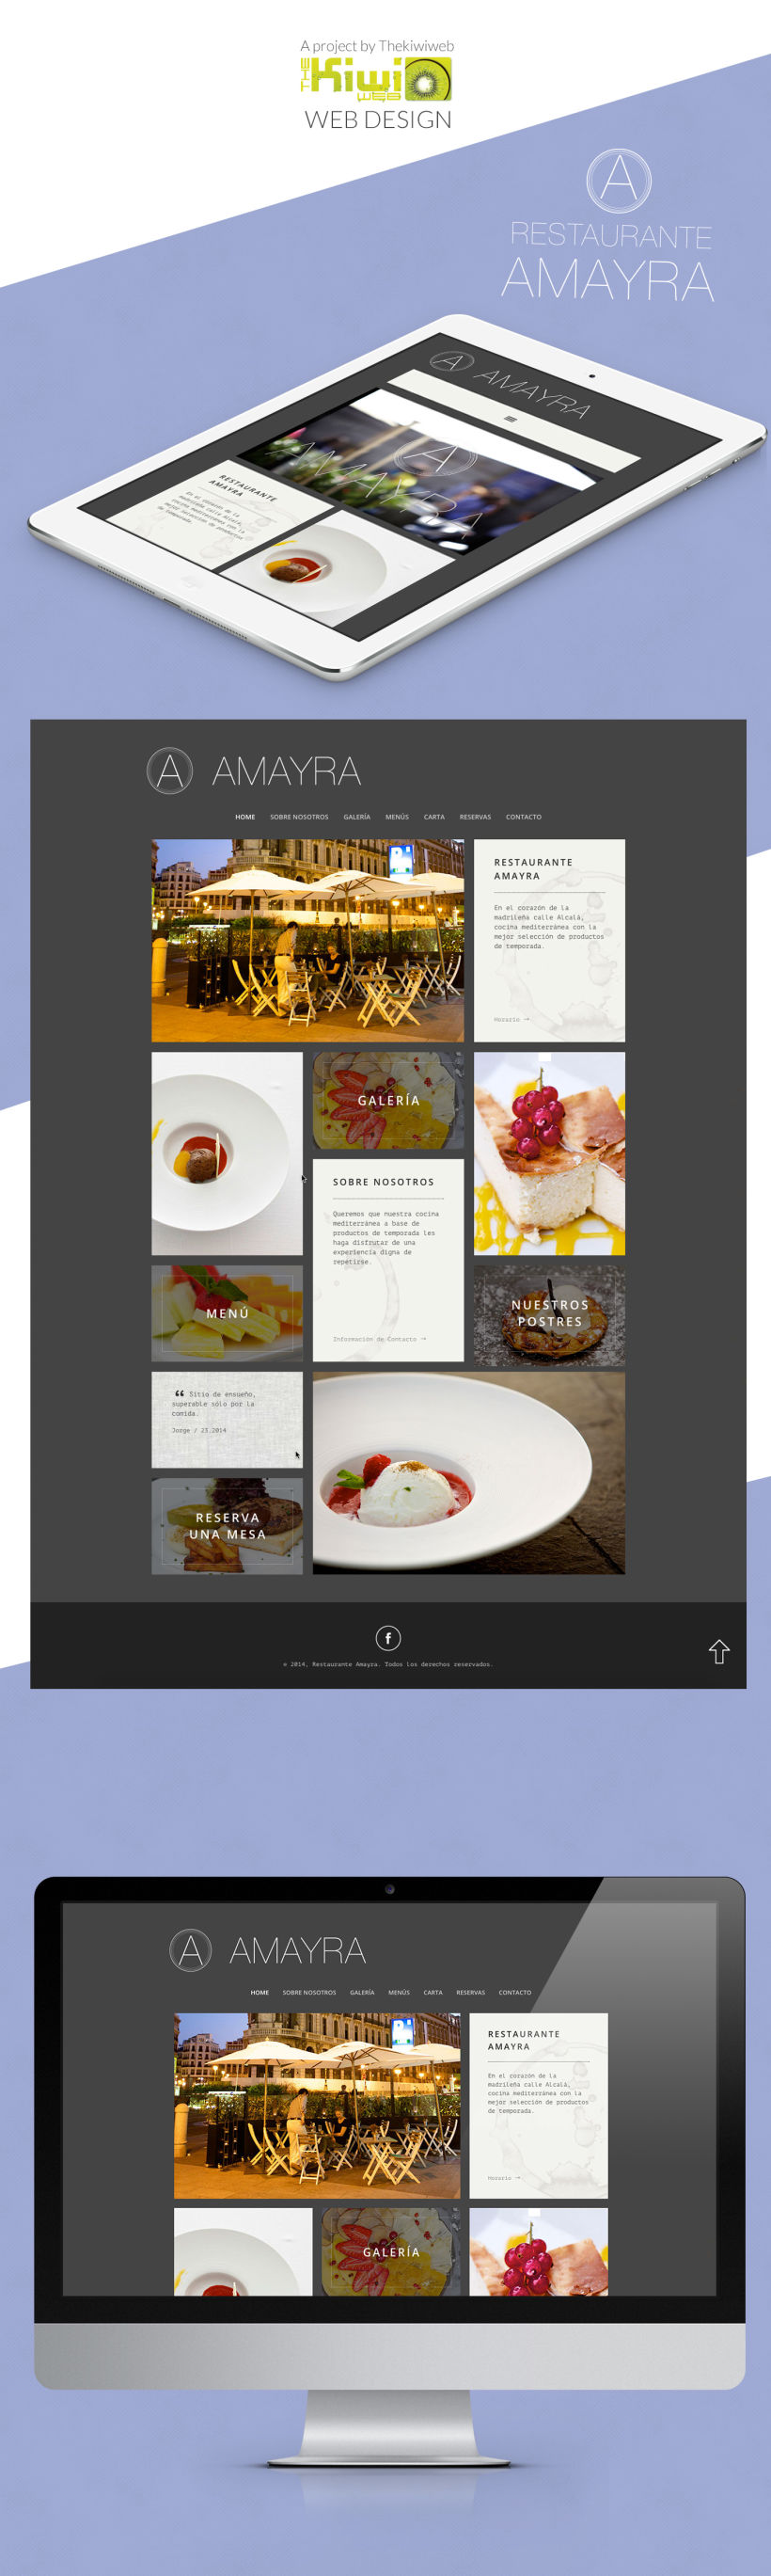 Restaurante Amayra Web Design 0